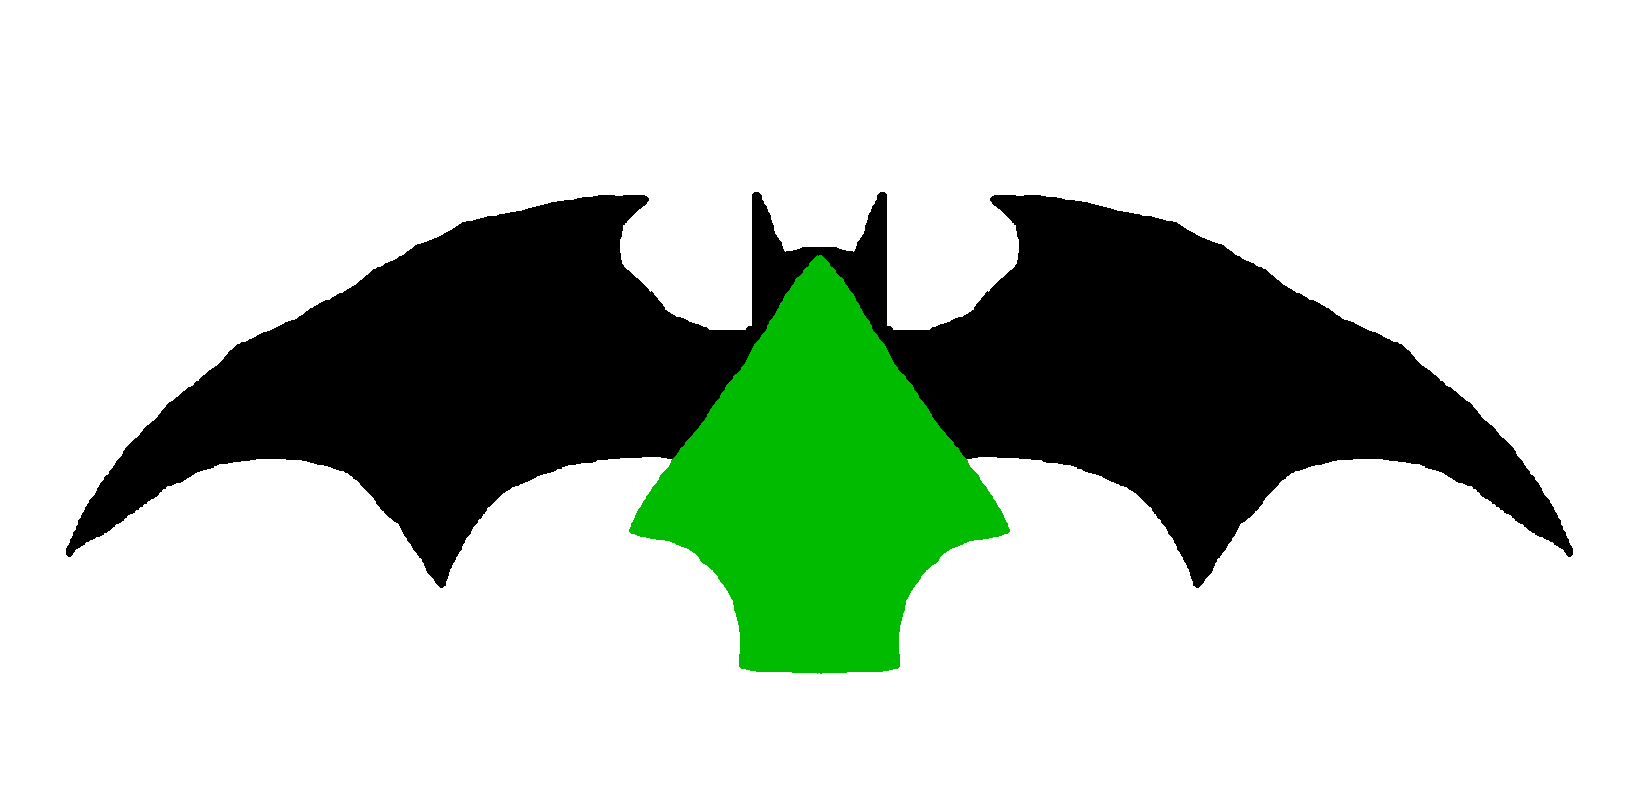 Batman-Green Arrow Symbol, Rough Art by MetroXLR99 on deviantART